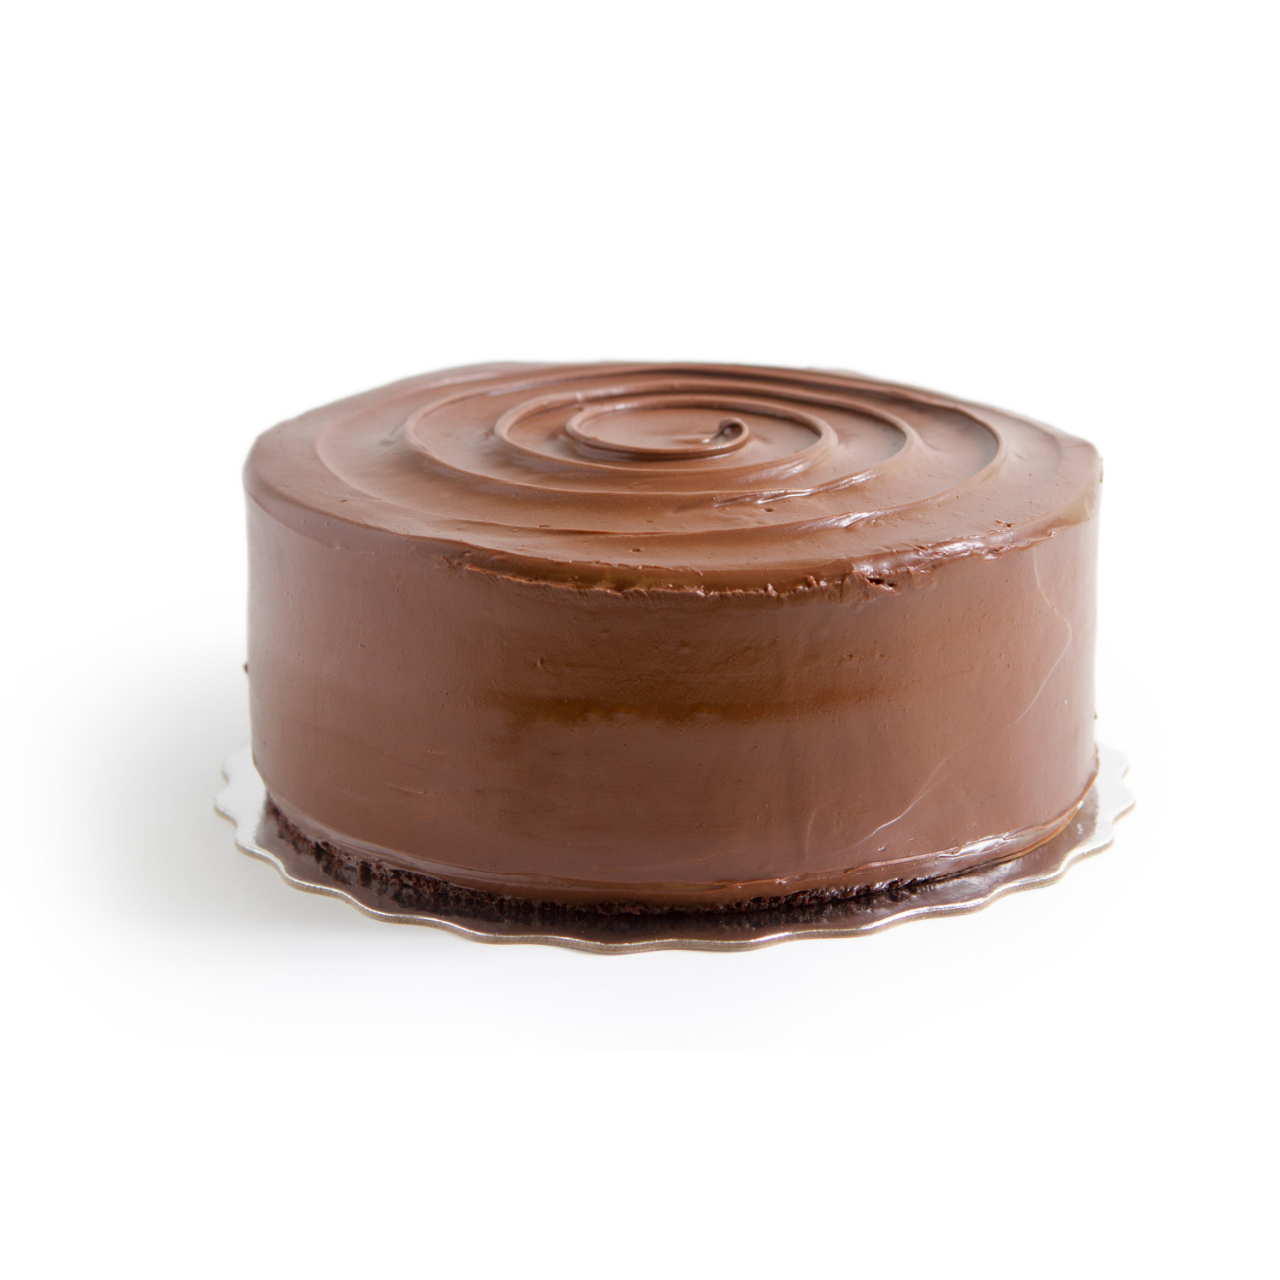 GF-Chocolate-Cake-7-inch-beauty